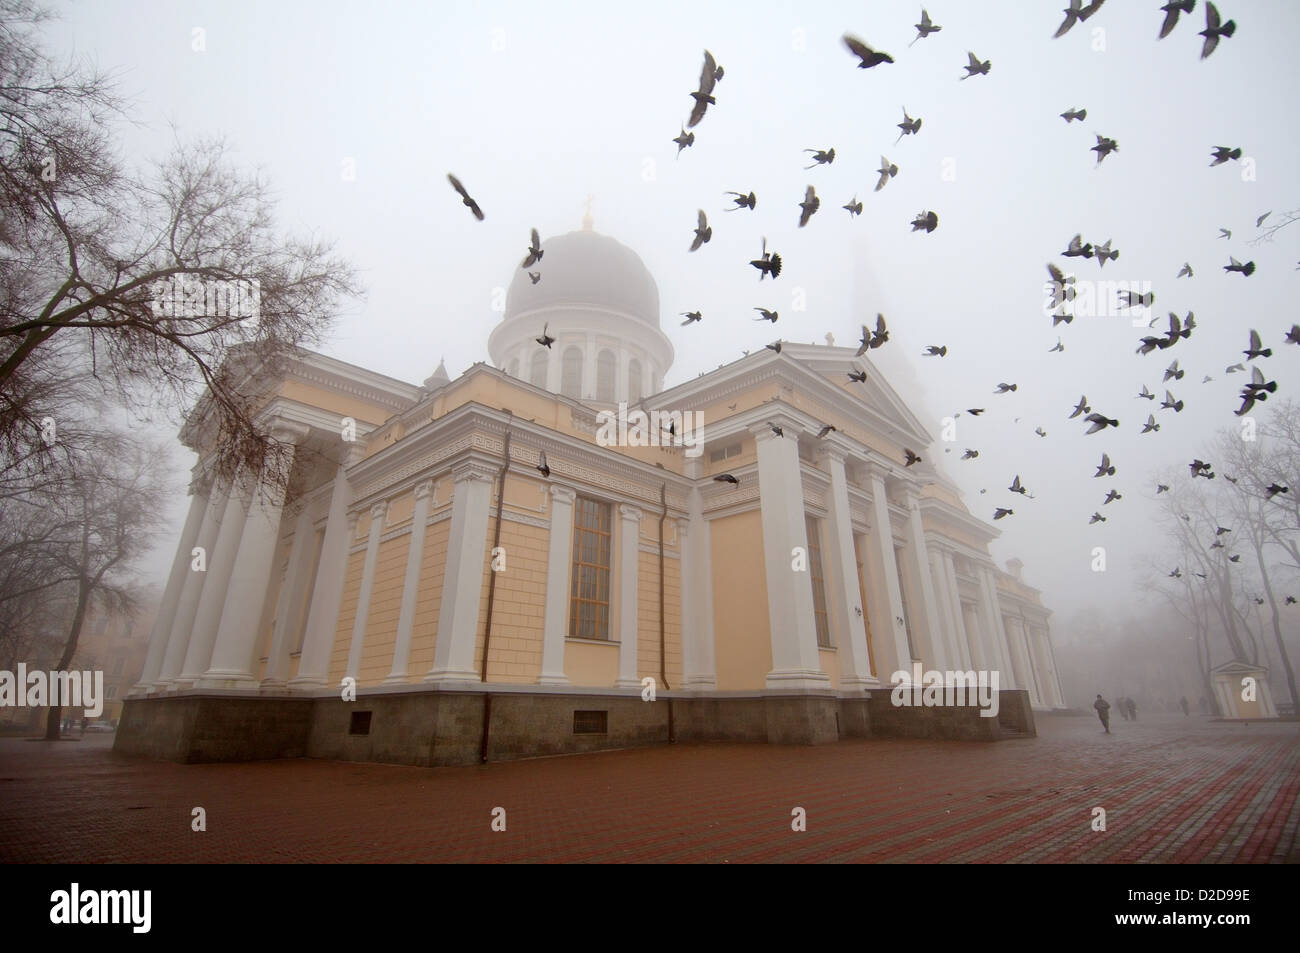 Cathédrale Orthodoxe d'Odessa ou Cathédrale Spaso-preobrajensky dans un brouillard, Odessa, Ukraine, Europe Banque D'Images